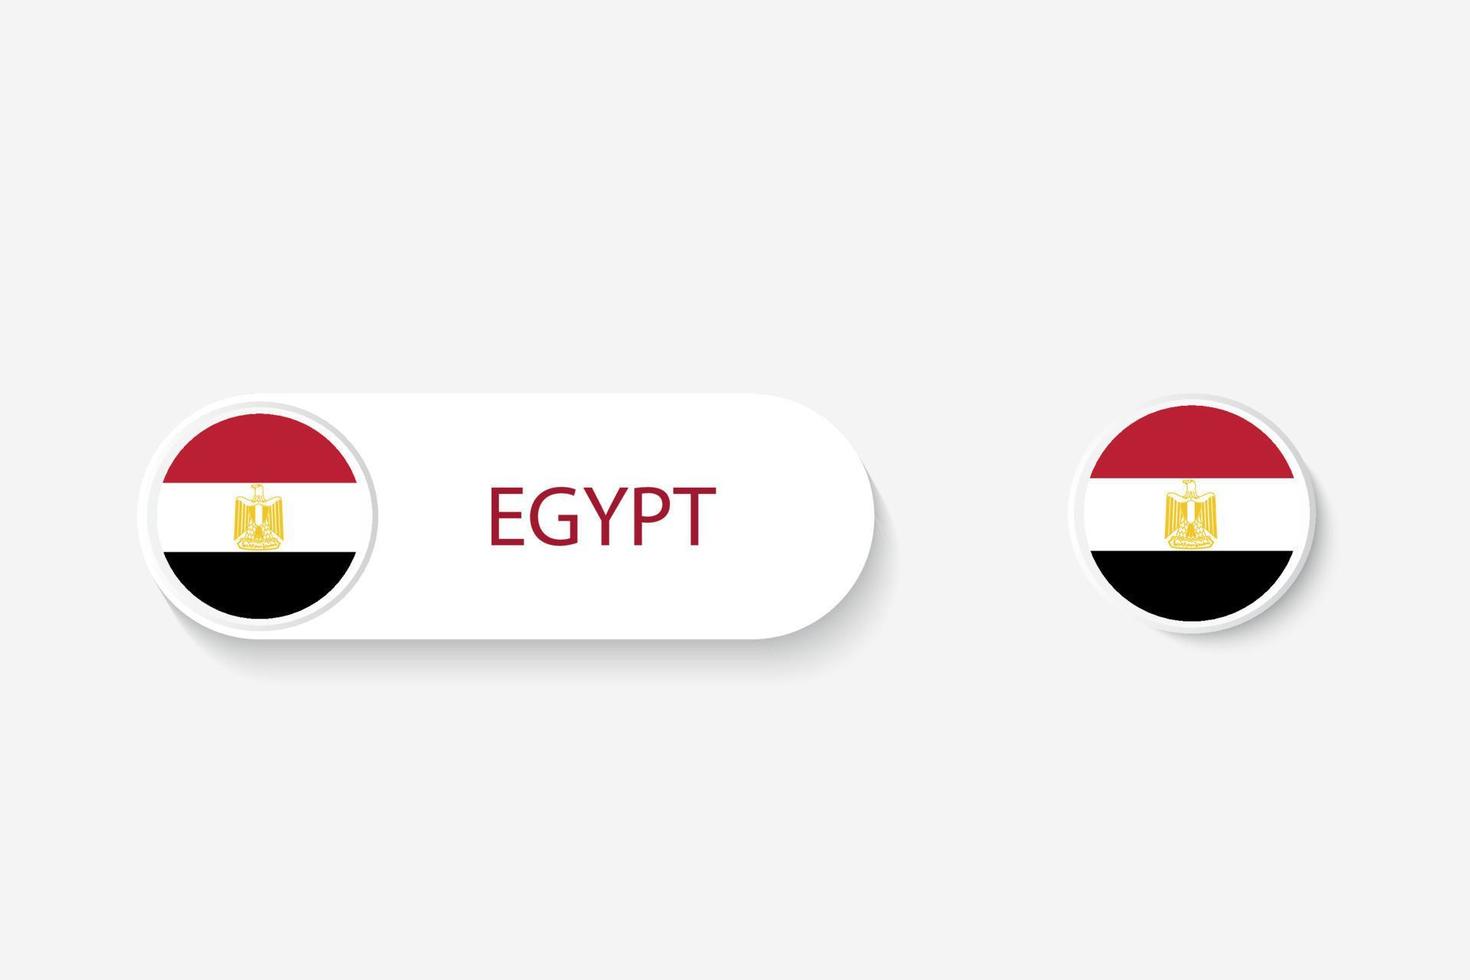 egypten knapp flagga i illustration av oval formad med word of egypt. och knappflagga egypten. vektor